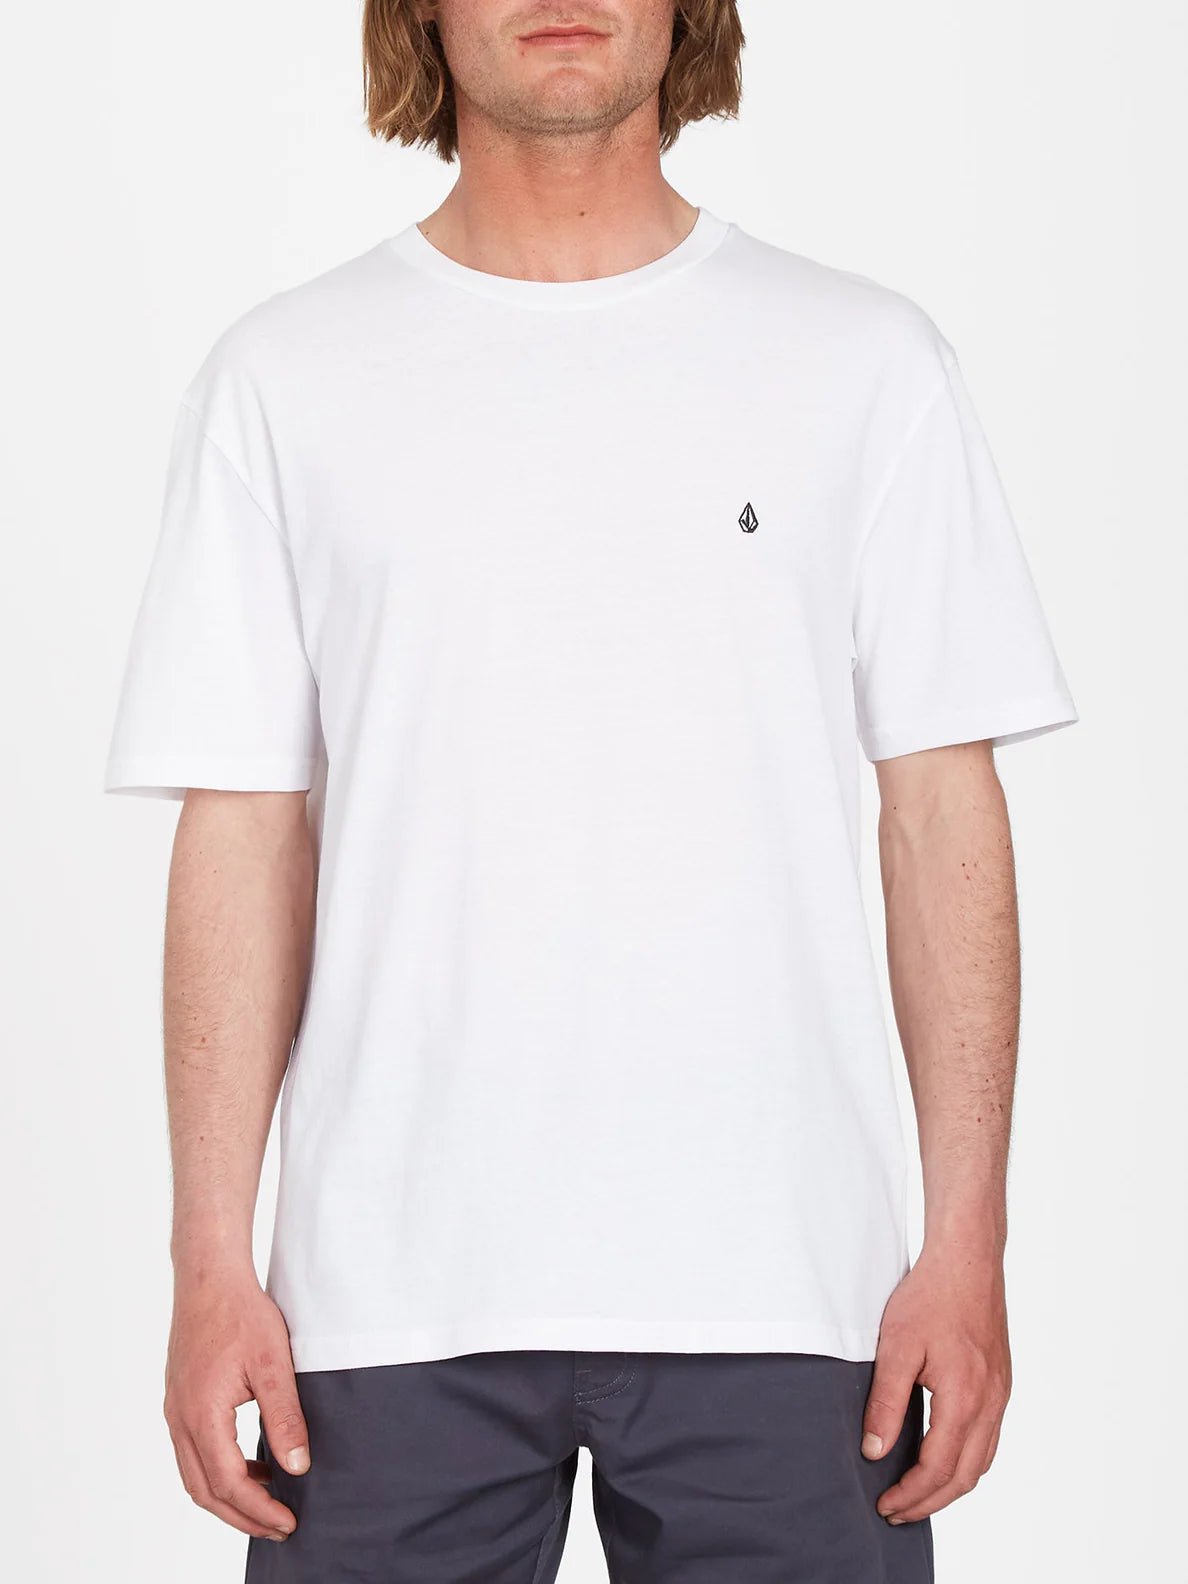 Camiseta Volcom Stone Blanks White | Camisetas de hombre | Camisetas manga corta de hombre | Volcom Shop | surfdevils.com